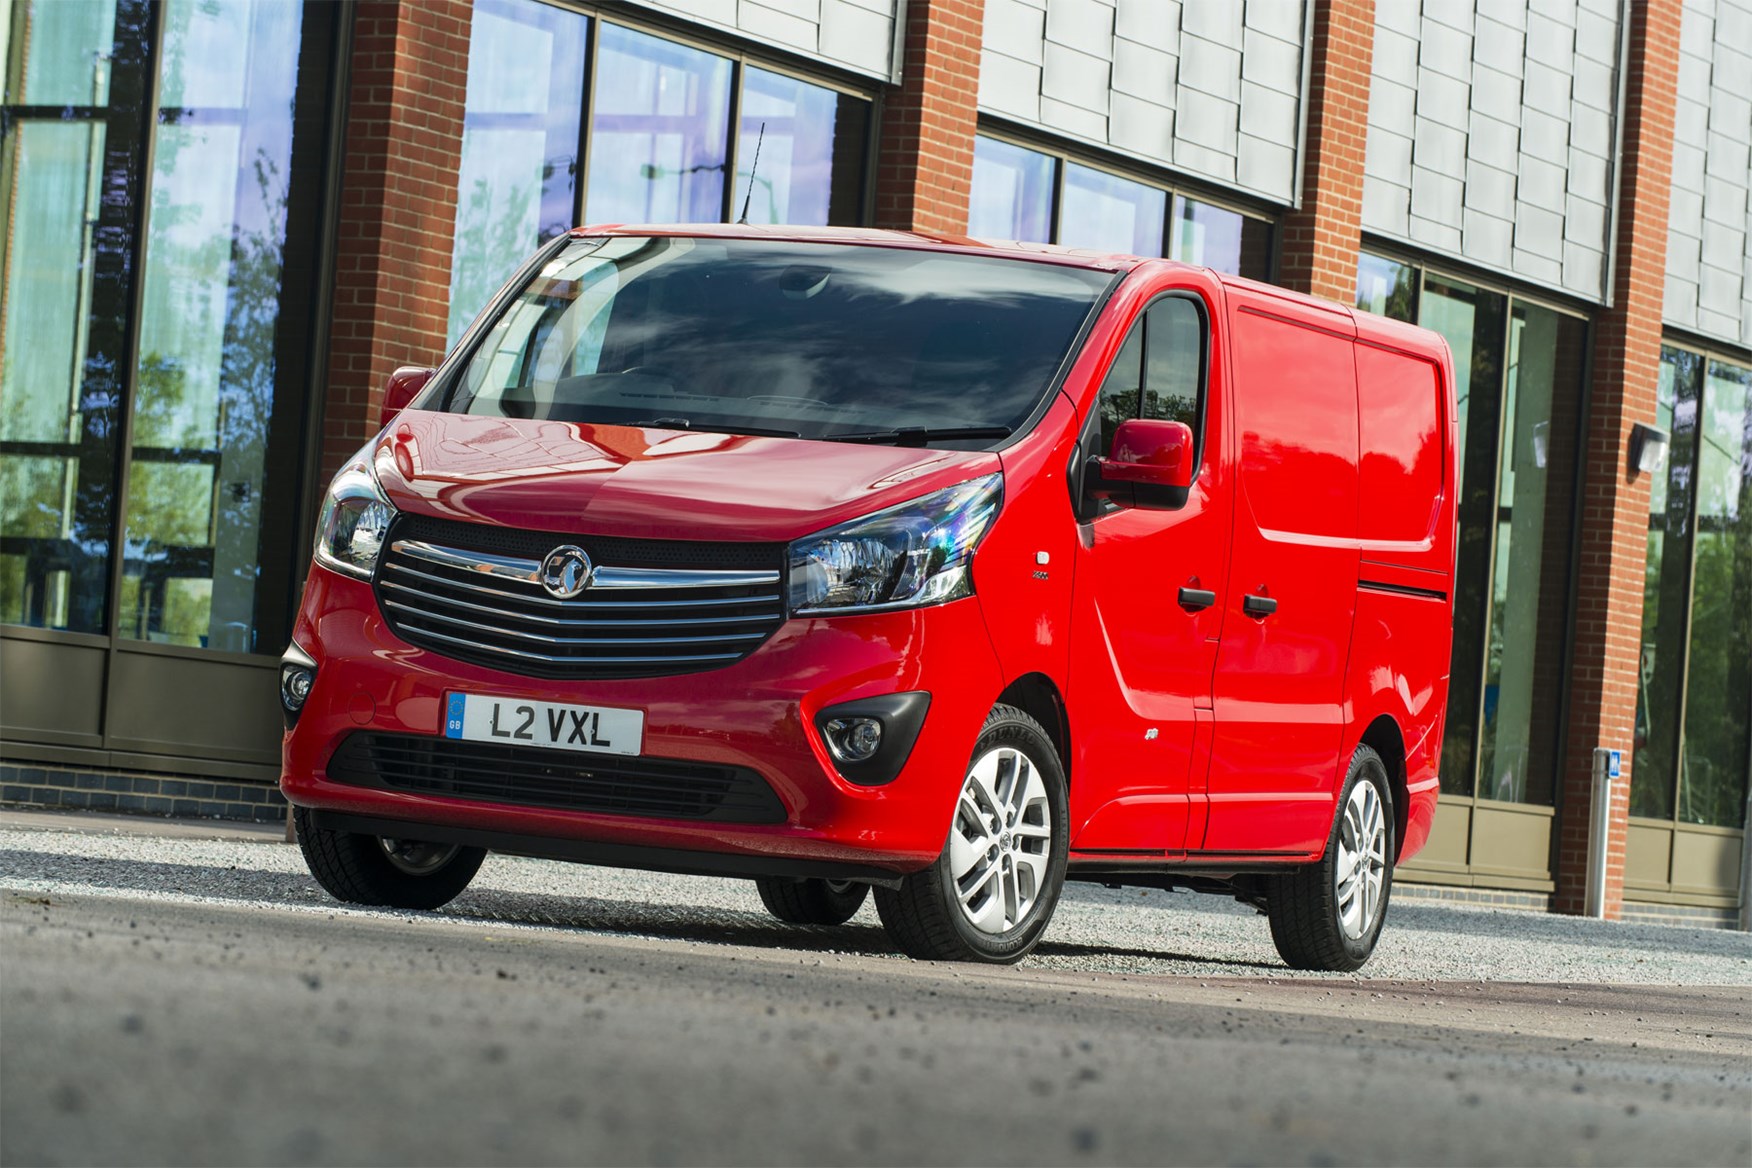 New Vauxhall Vivaro van for 2019  Parkers